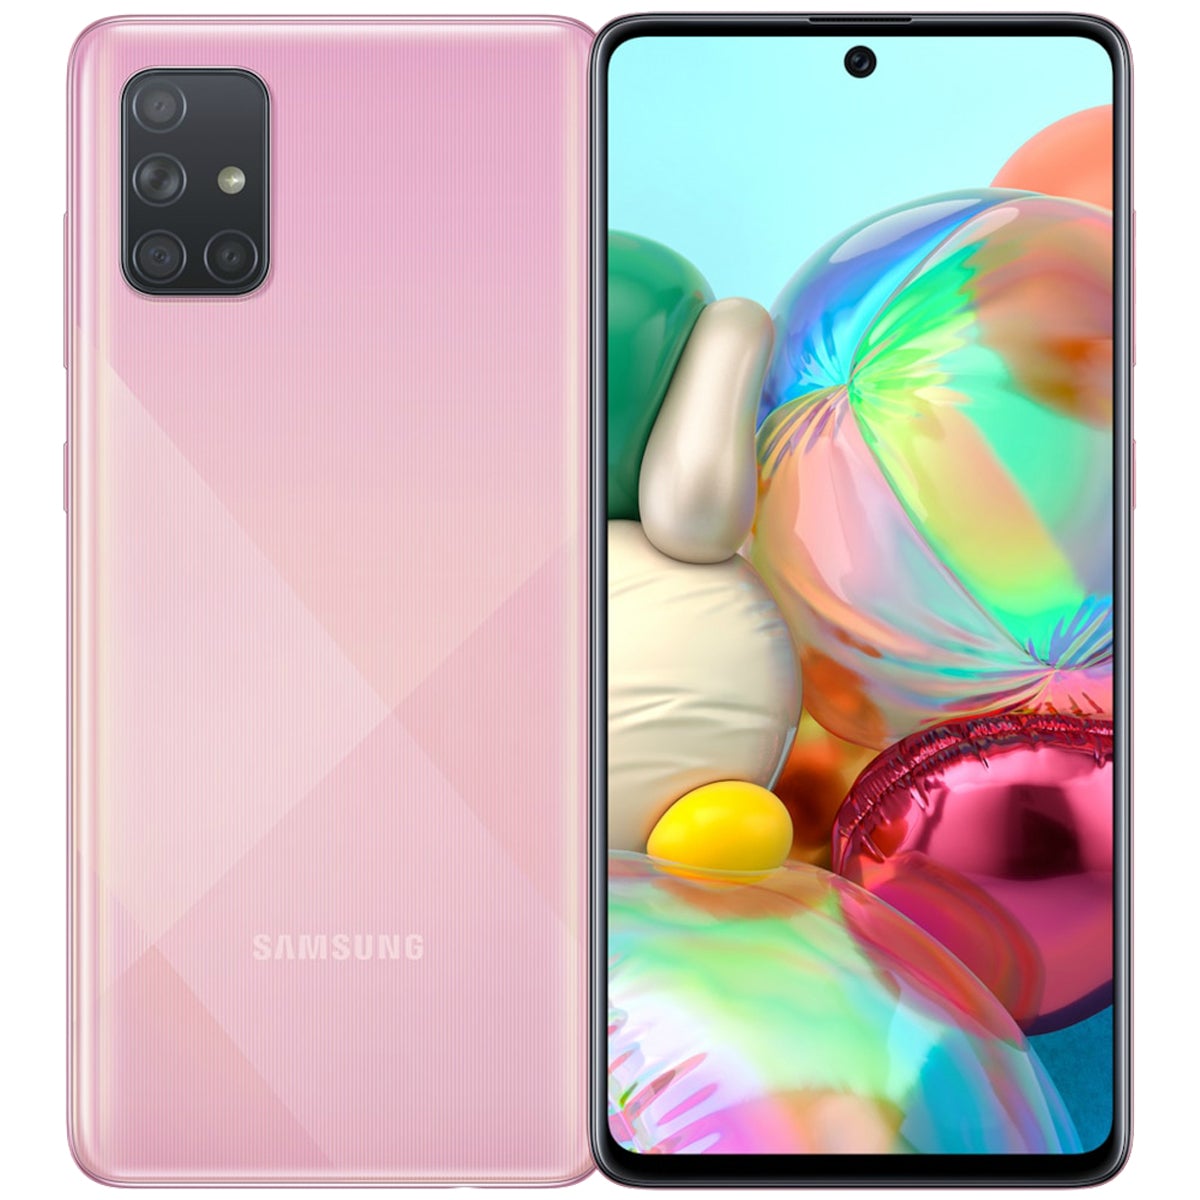 Samsung Galaxy A71 FAIR Condition Unlocked Smartphone - RueZone Prime Crush Pink 128GB